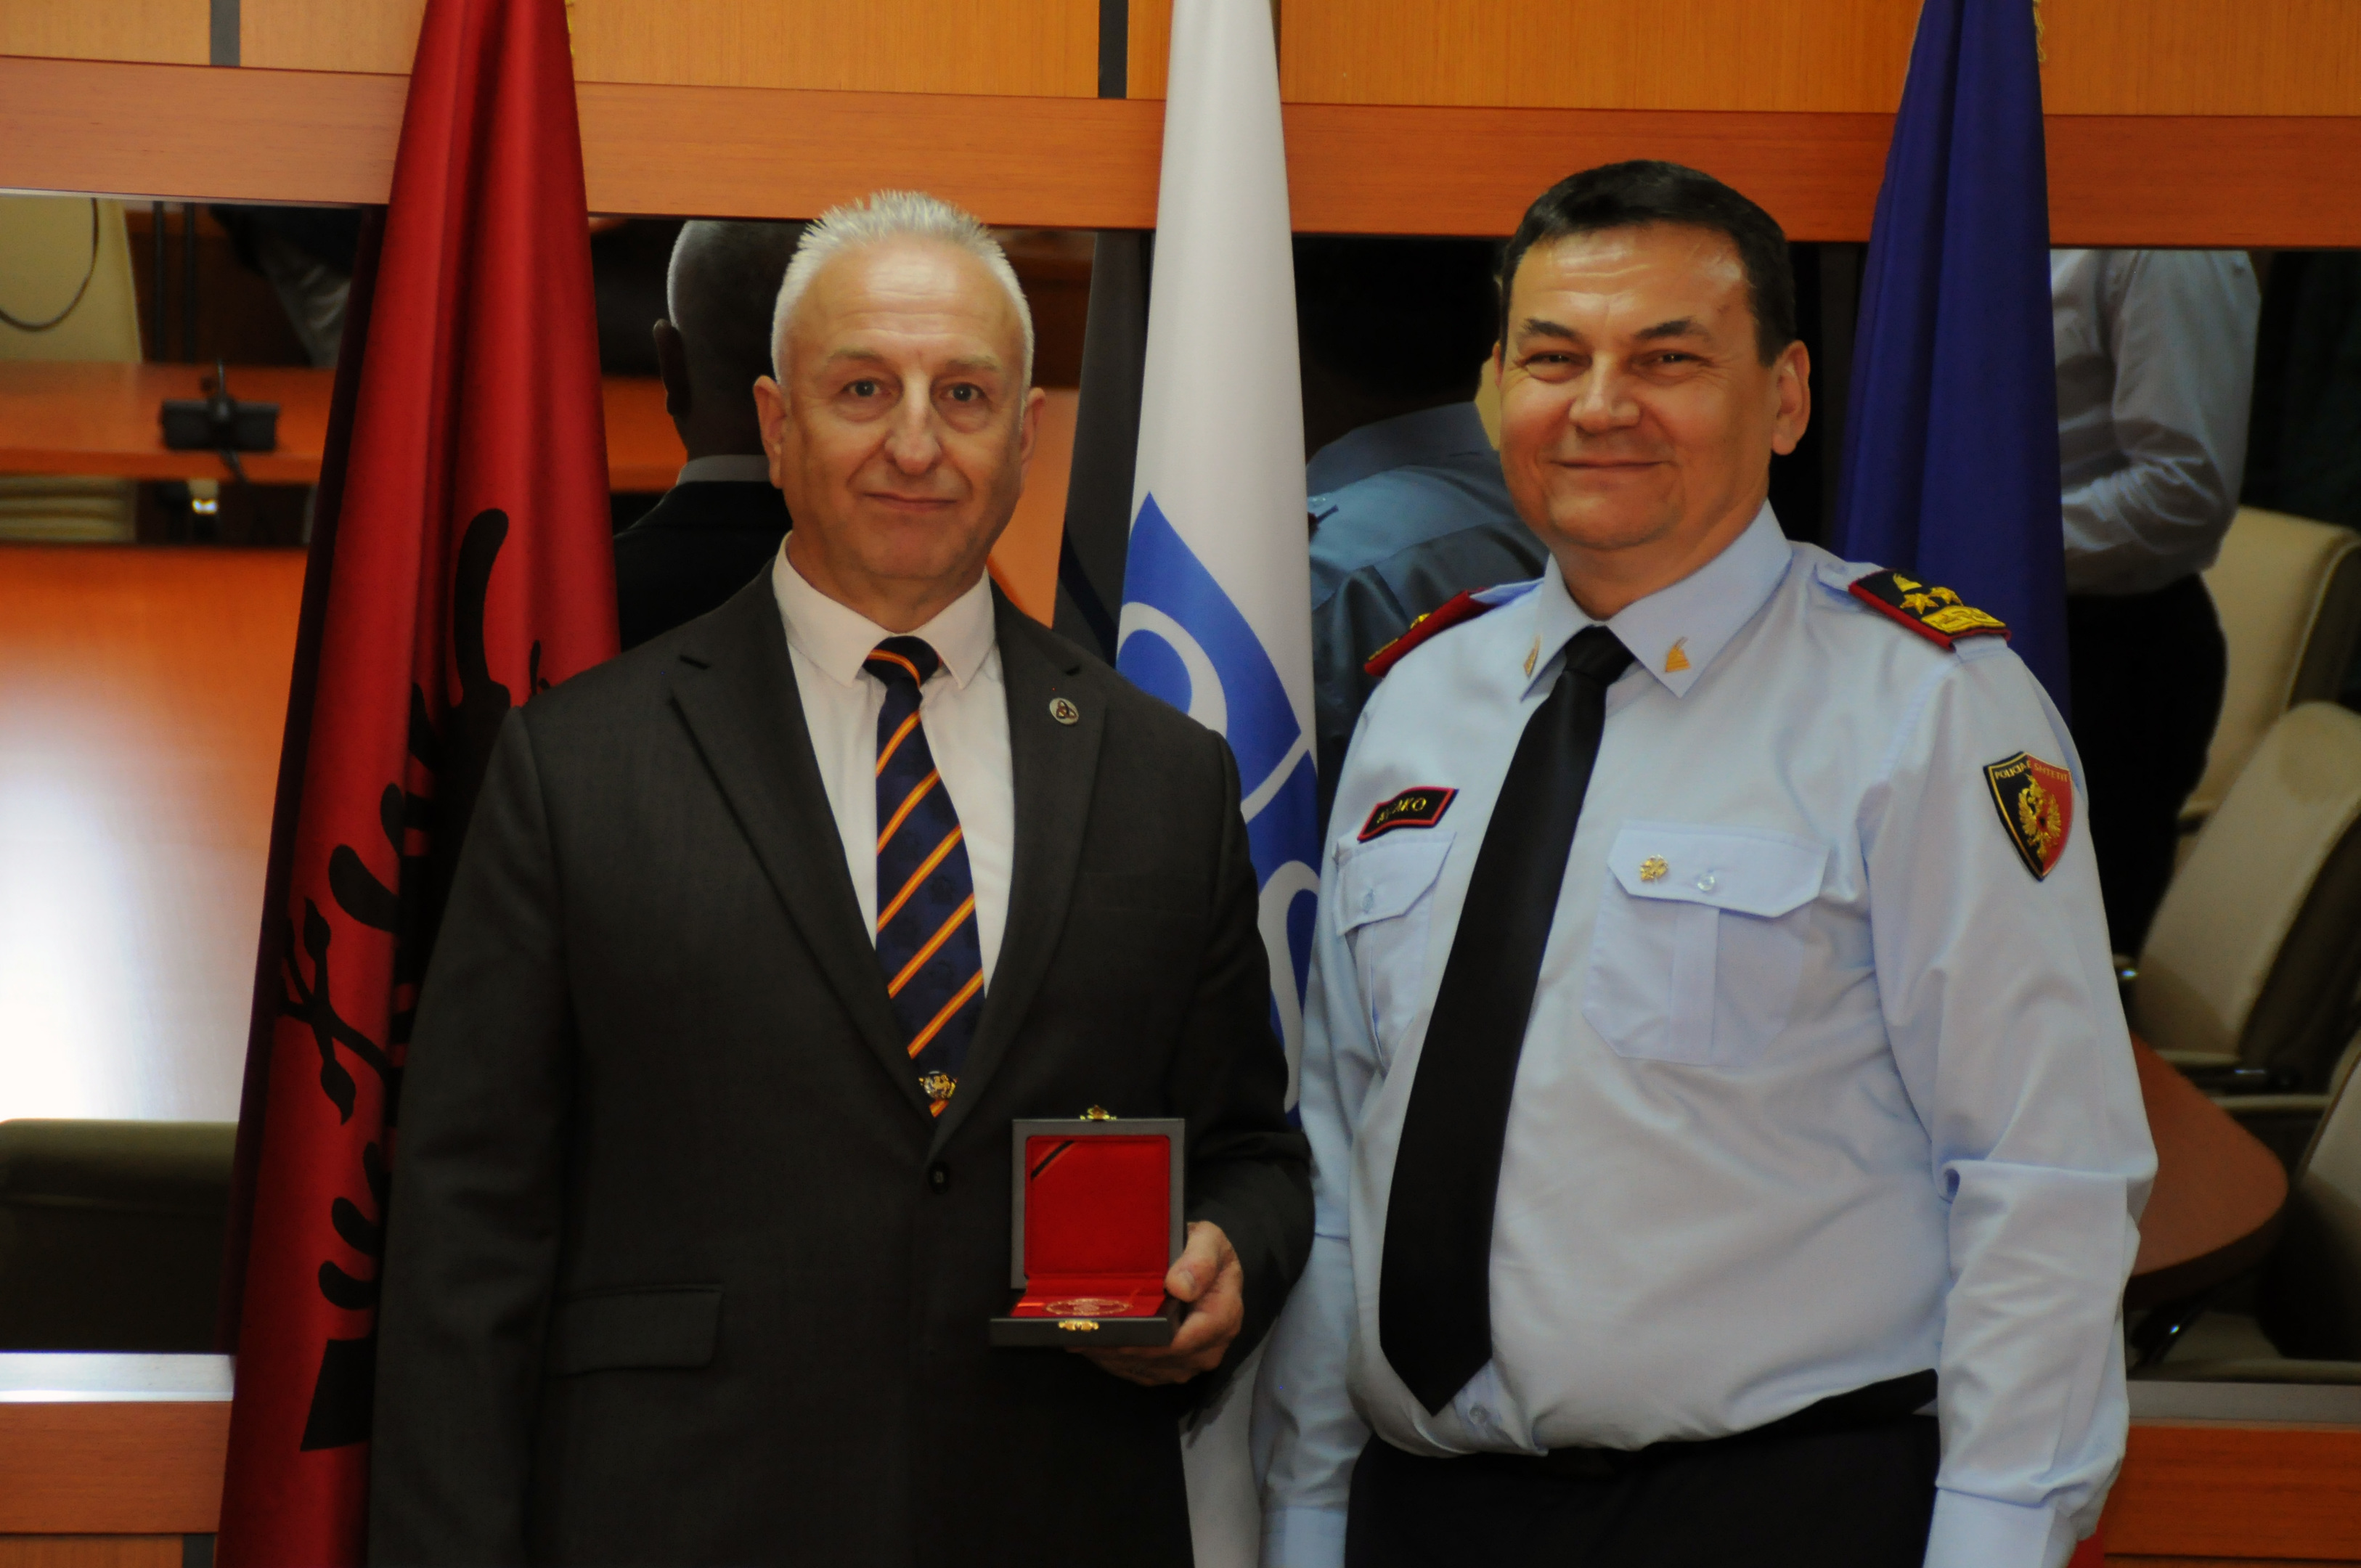 Adrian Nessel, left, receives his award in Albania